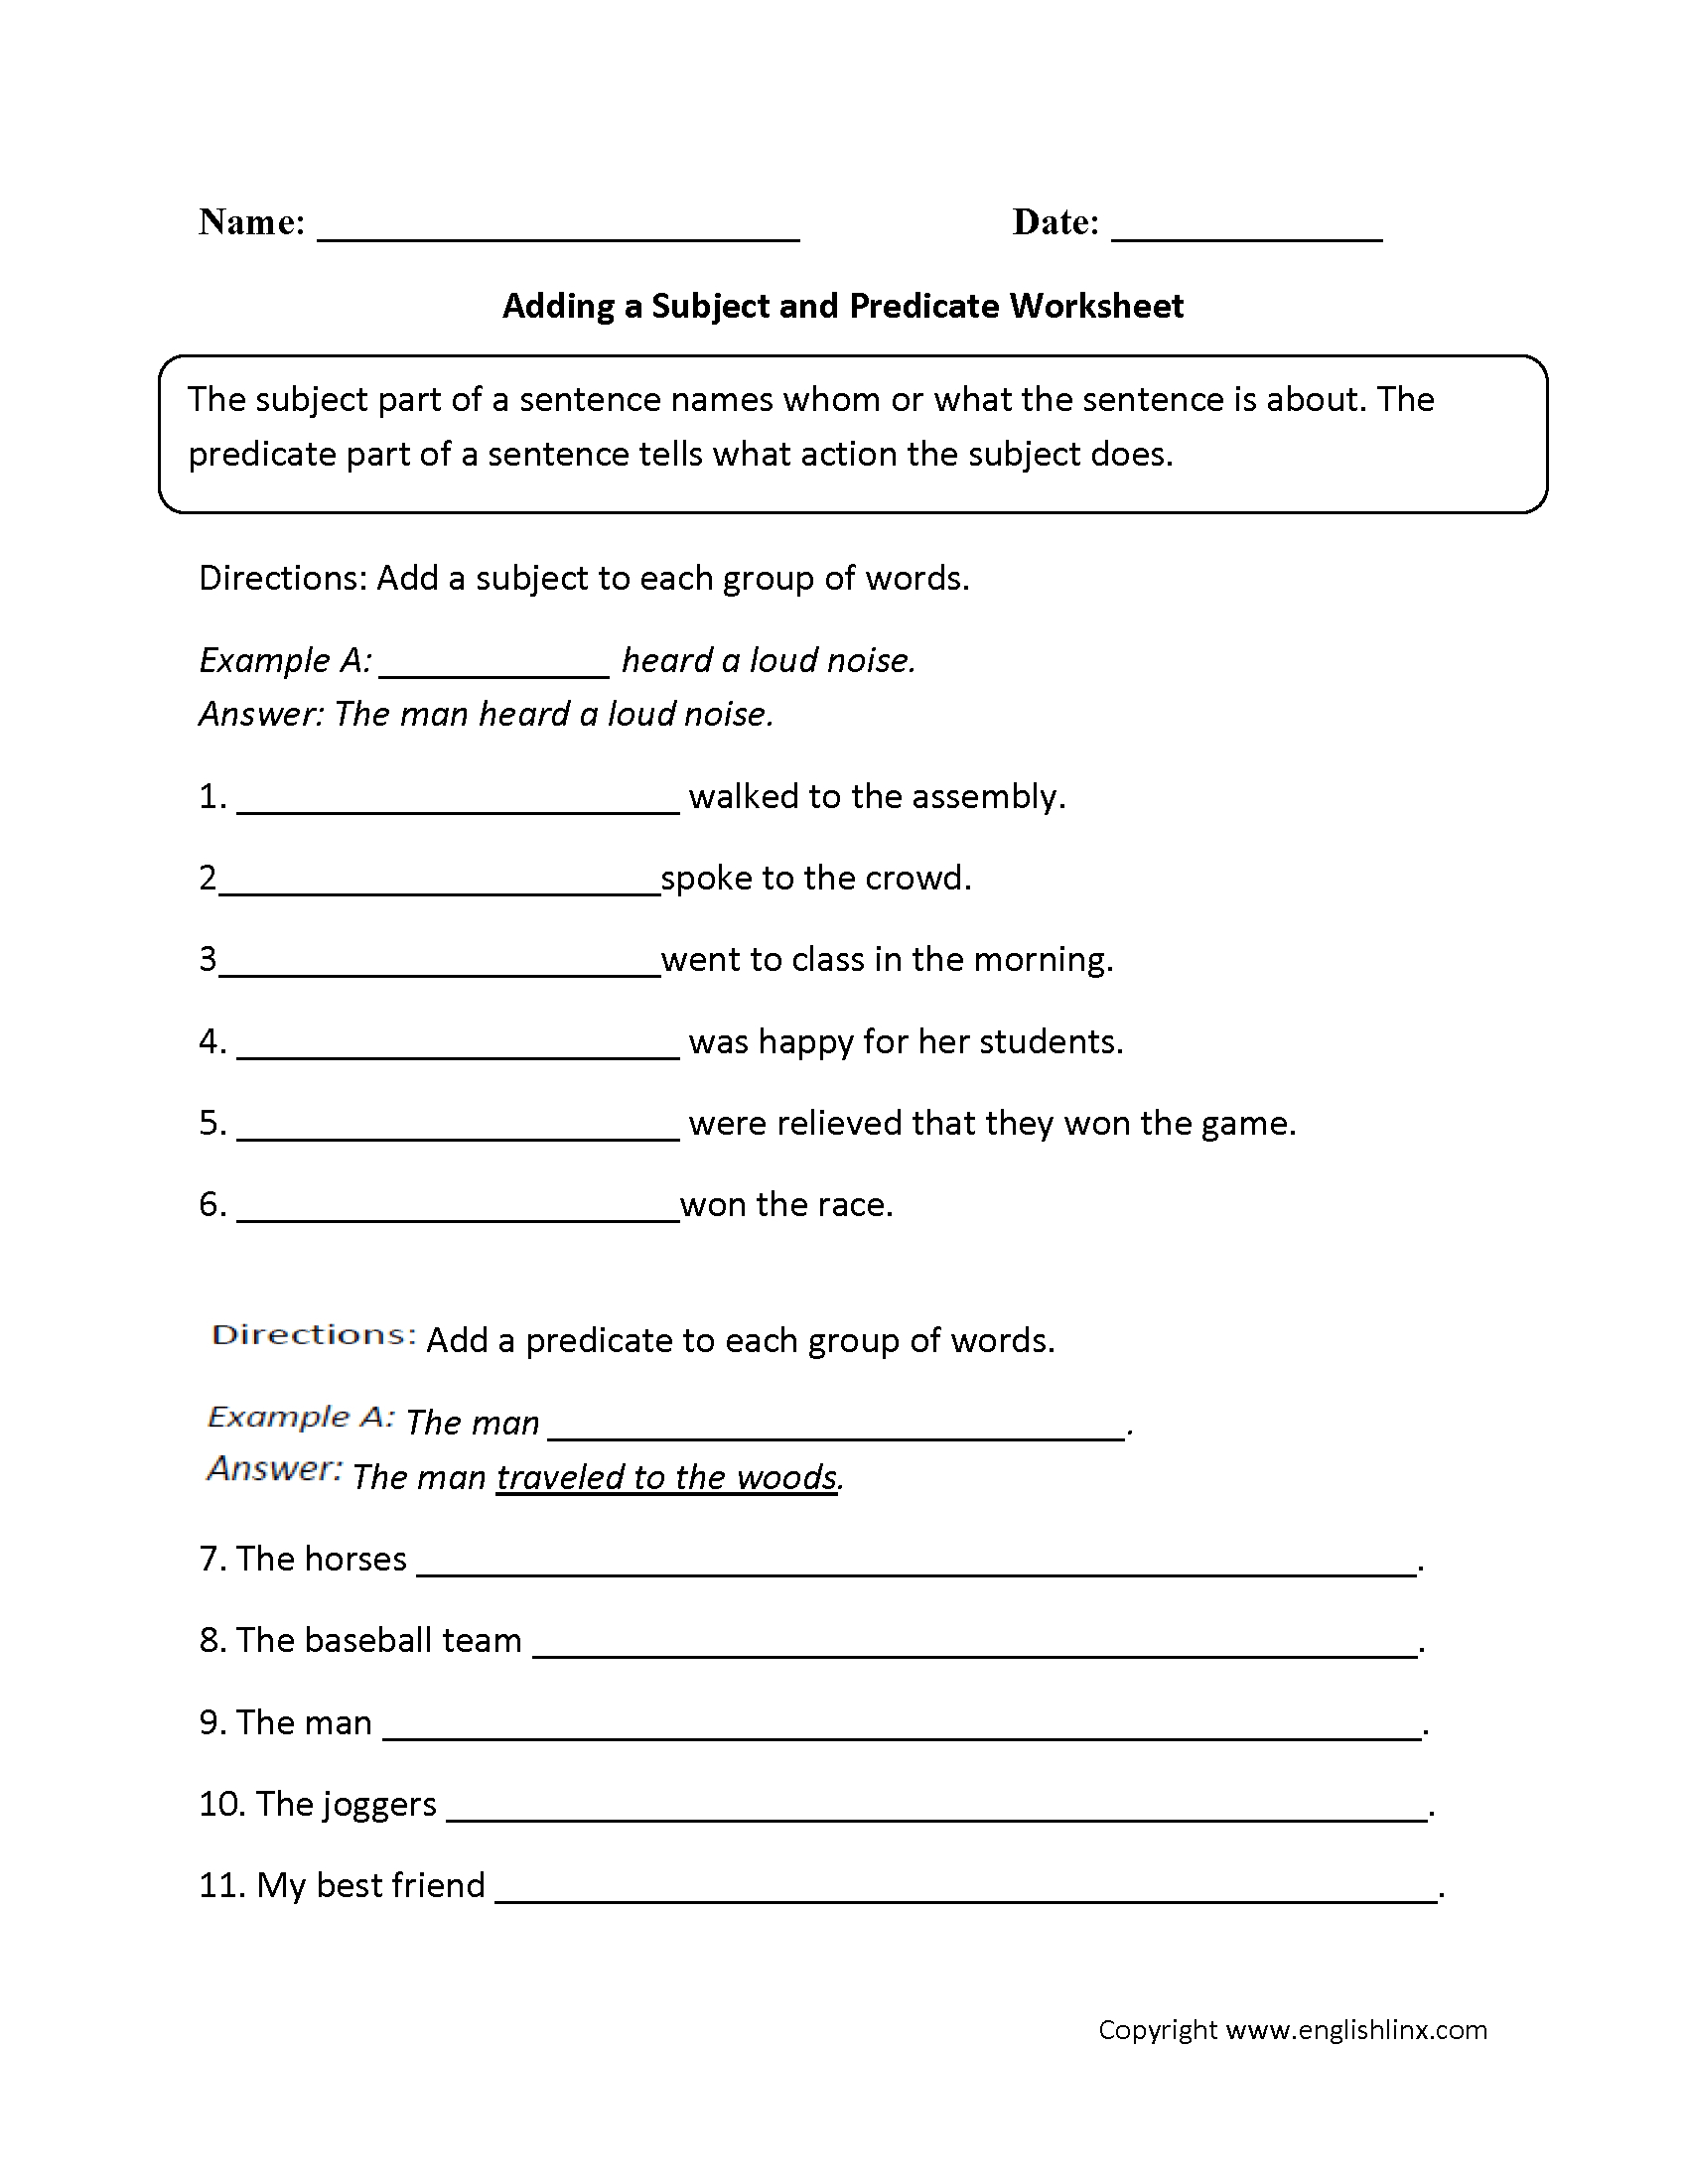 Englishlinx Subject And Predicate Worksheets 9Th Grade English Year 9 English Worksheets